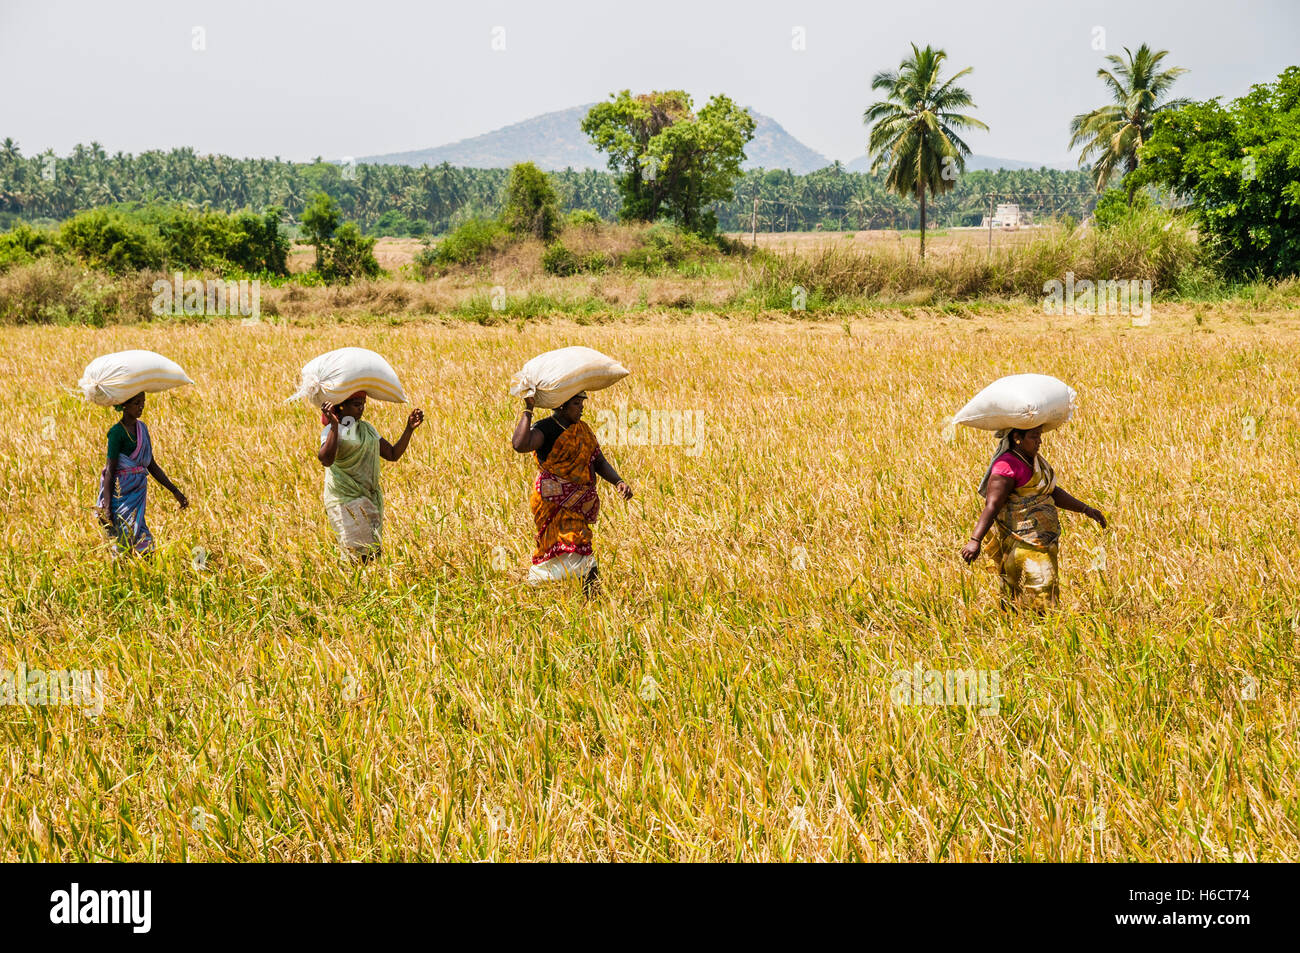 Indian women carry rice sacks on their heads through rice field, Uttamapalaiyam, Tamil Nadu, India Stock Photo